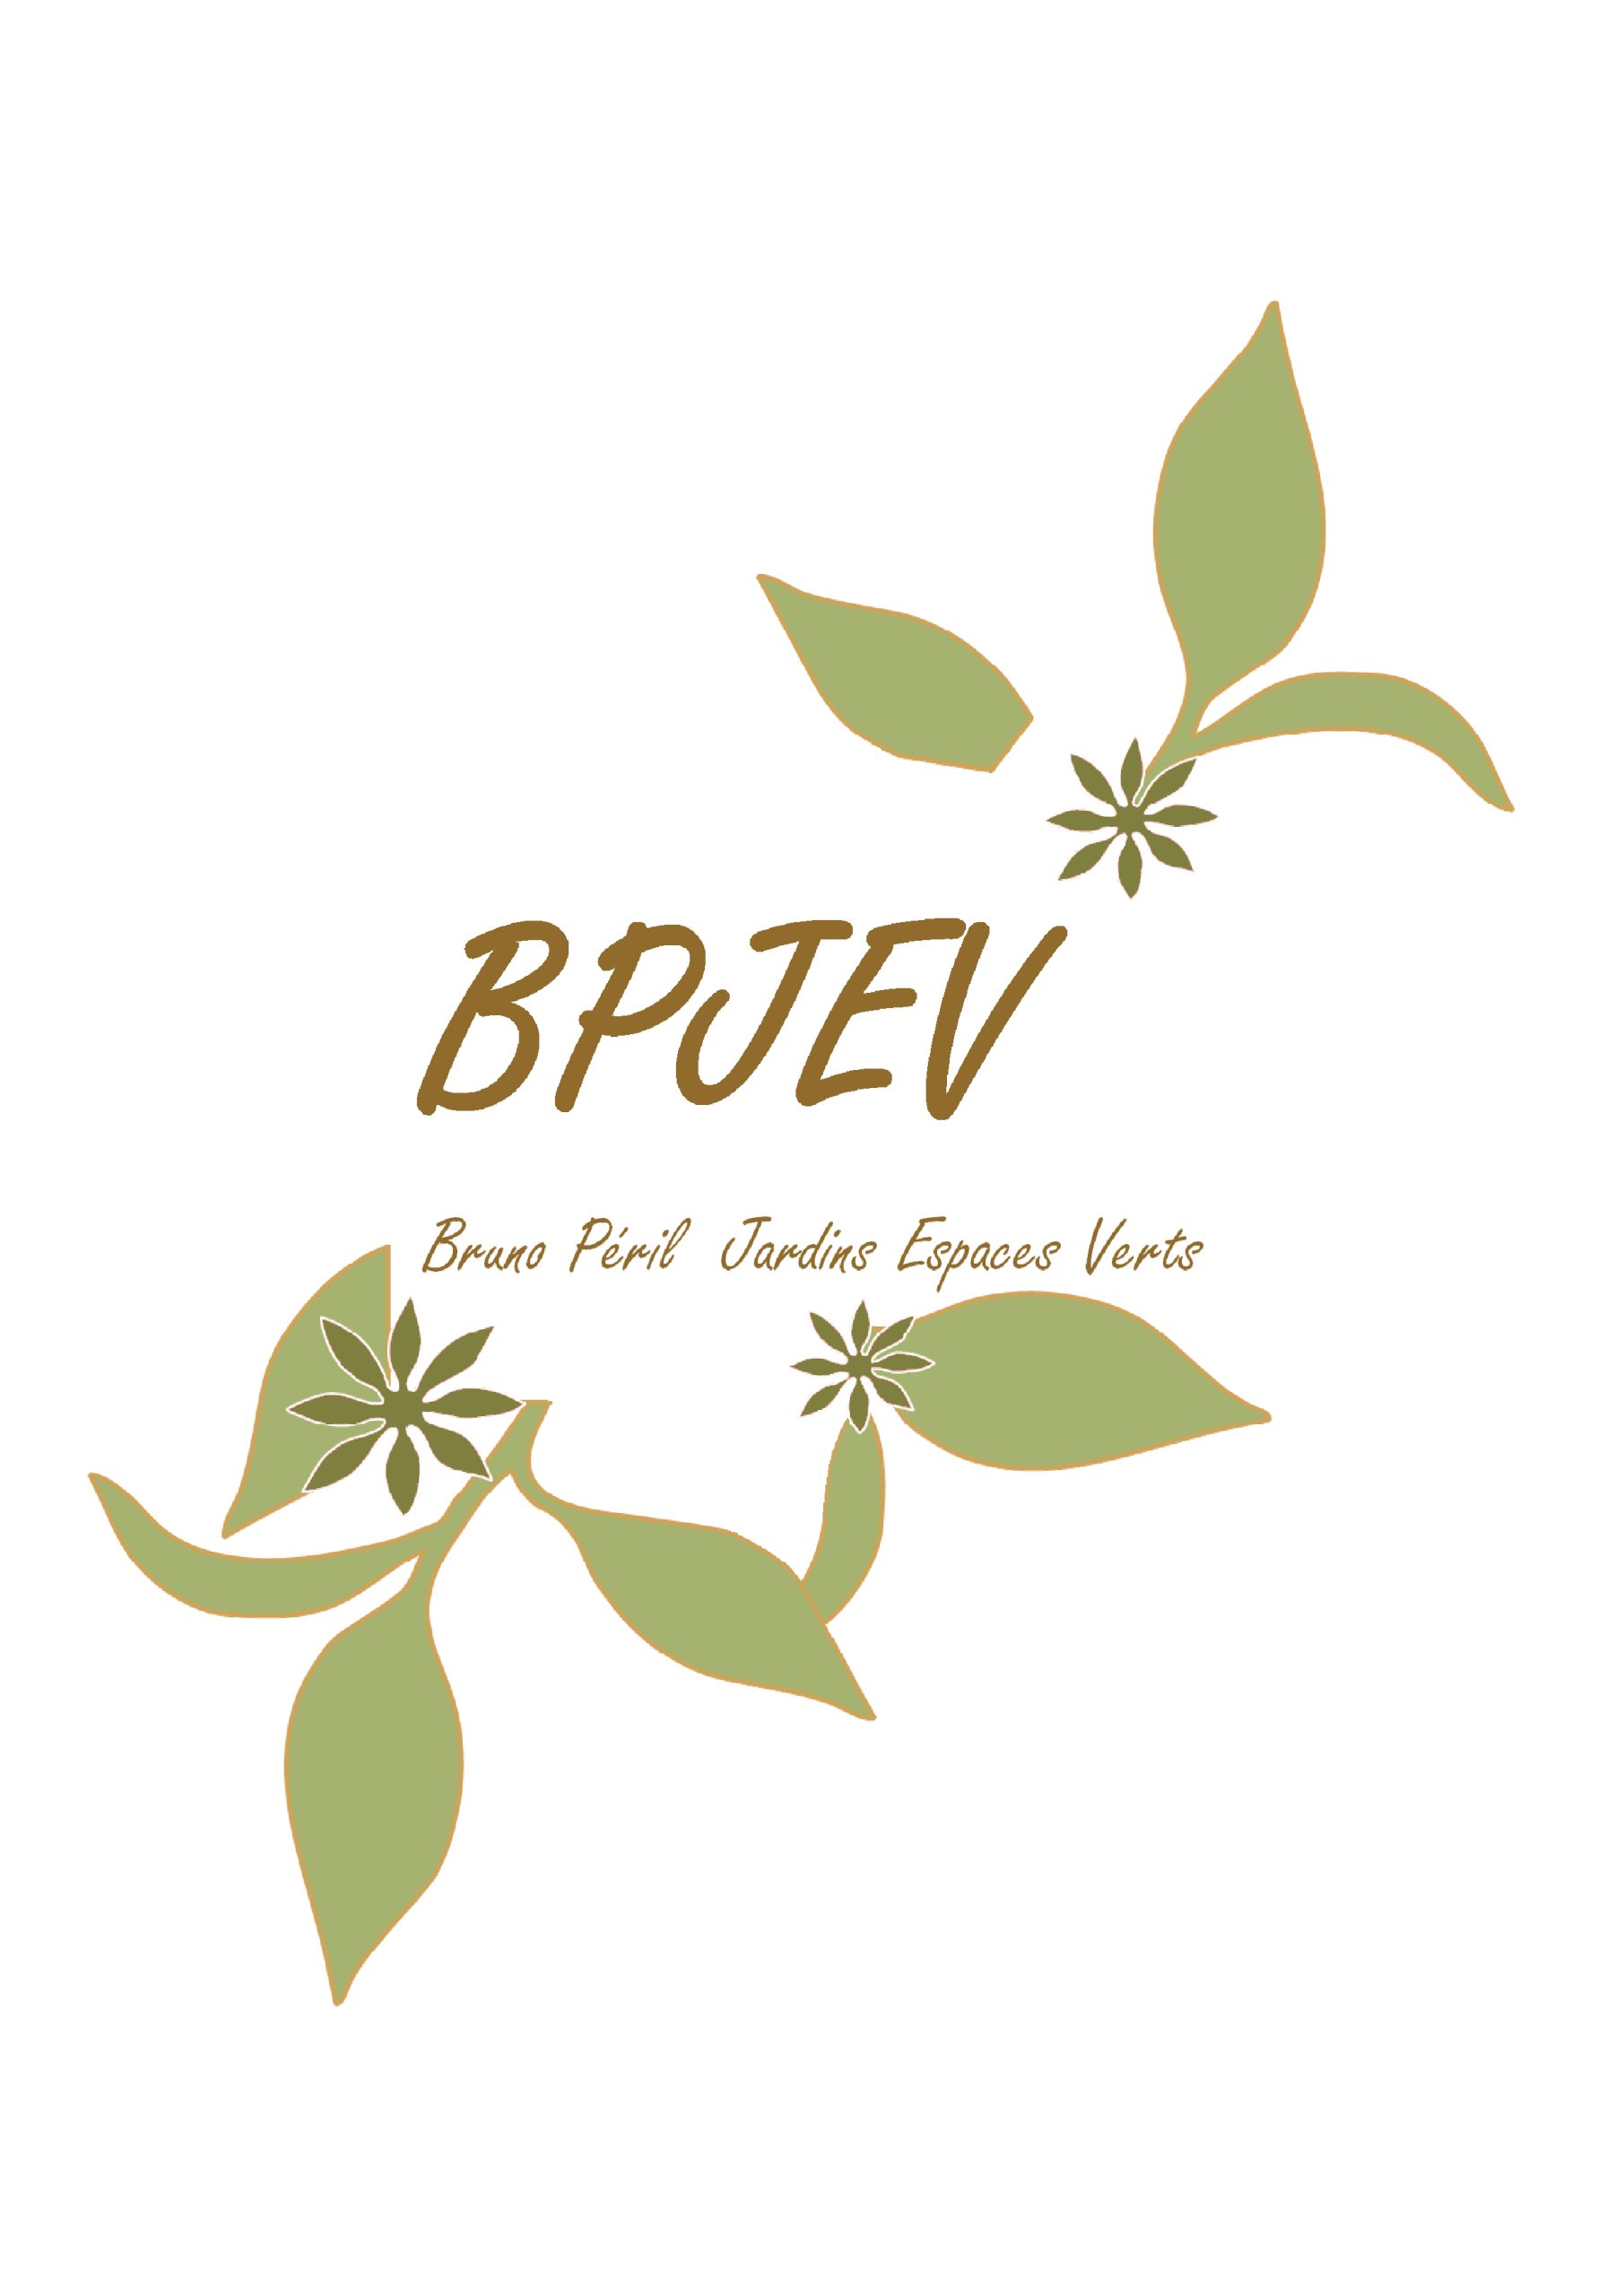 Logo BPJEV BRUNO PERIL JARDINS ESPACES VERTS